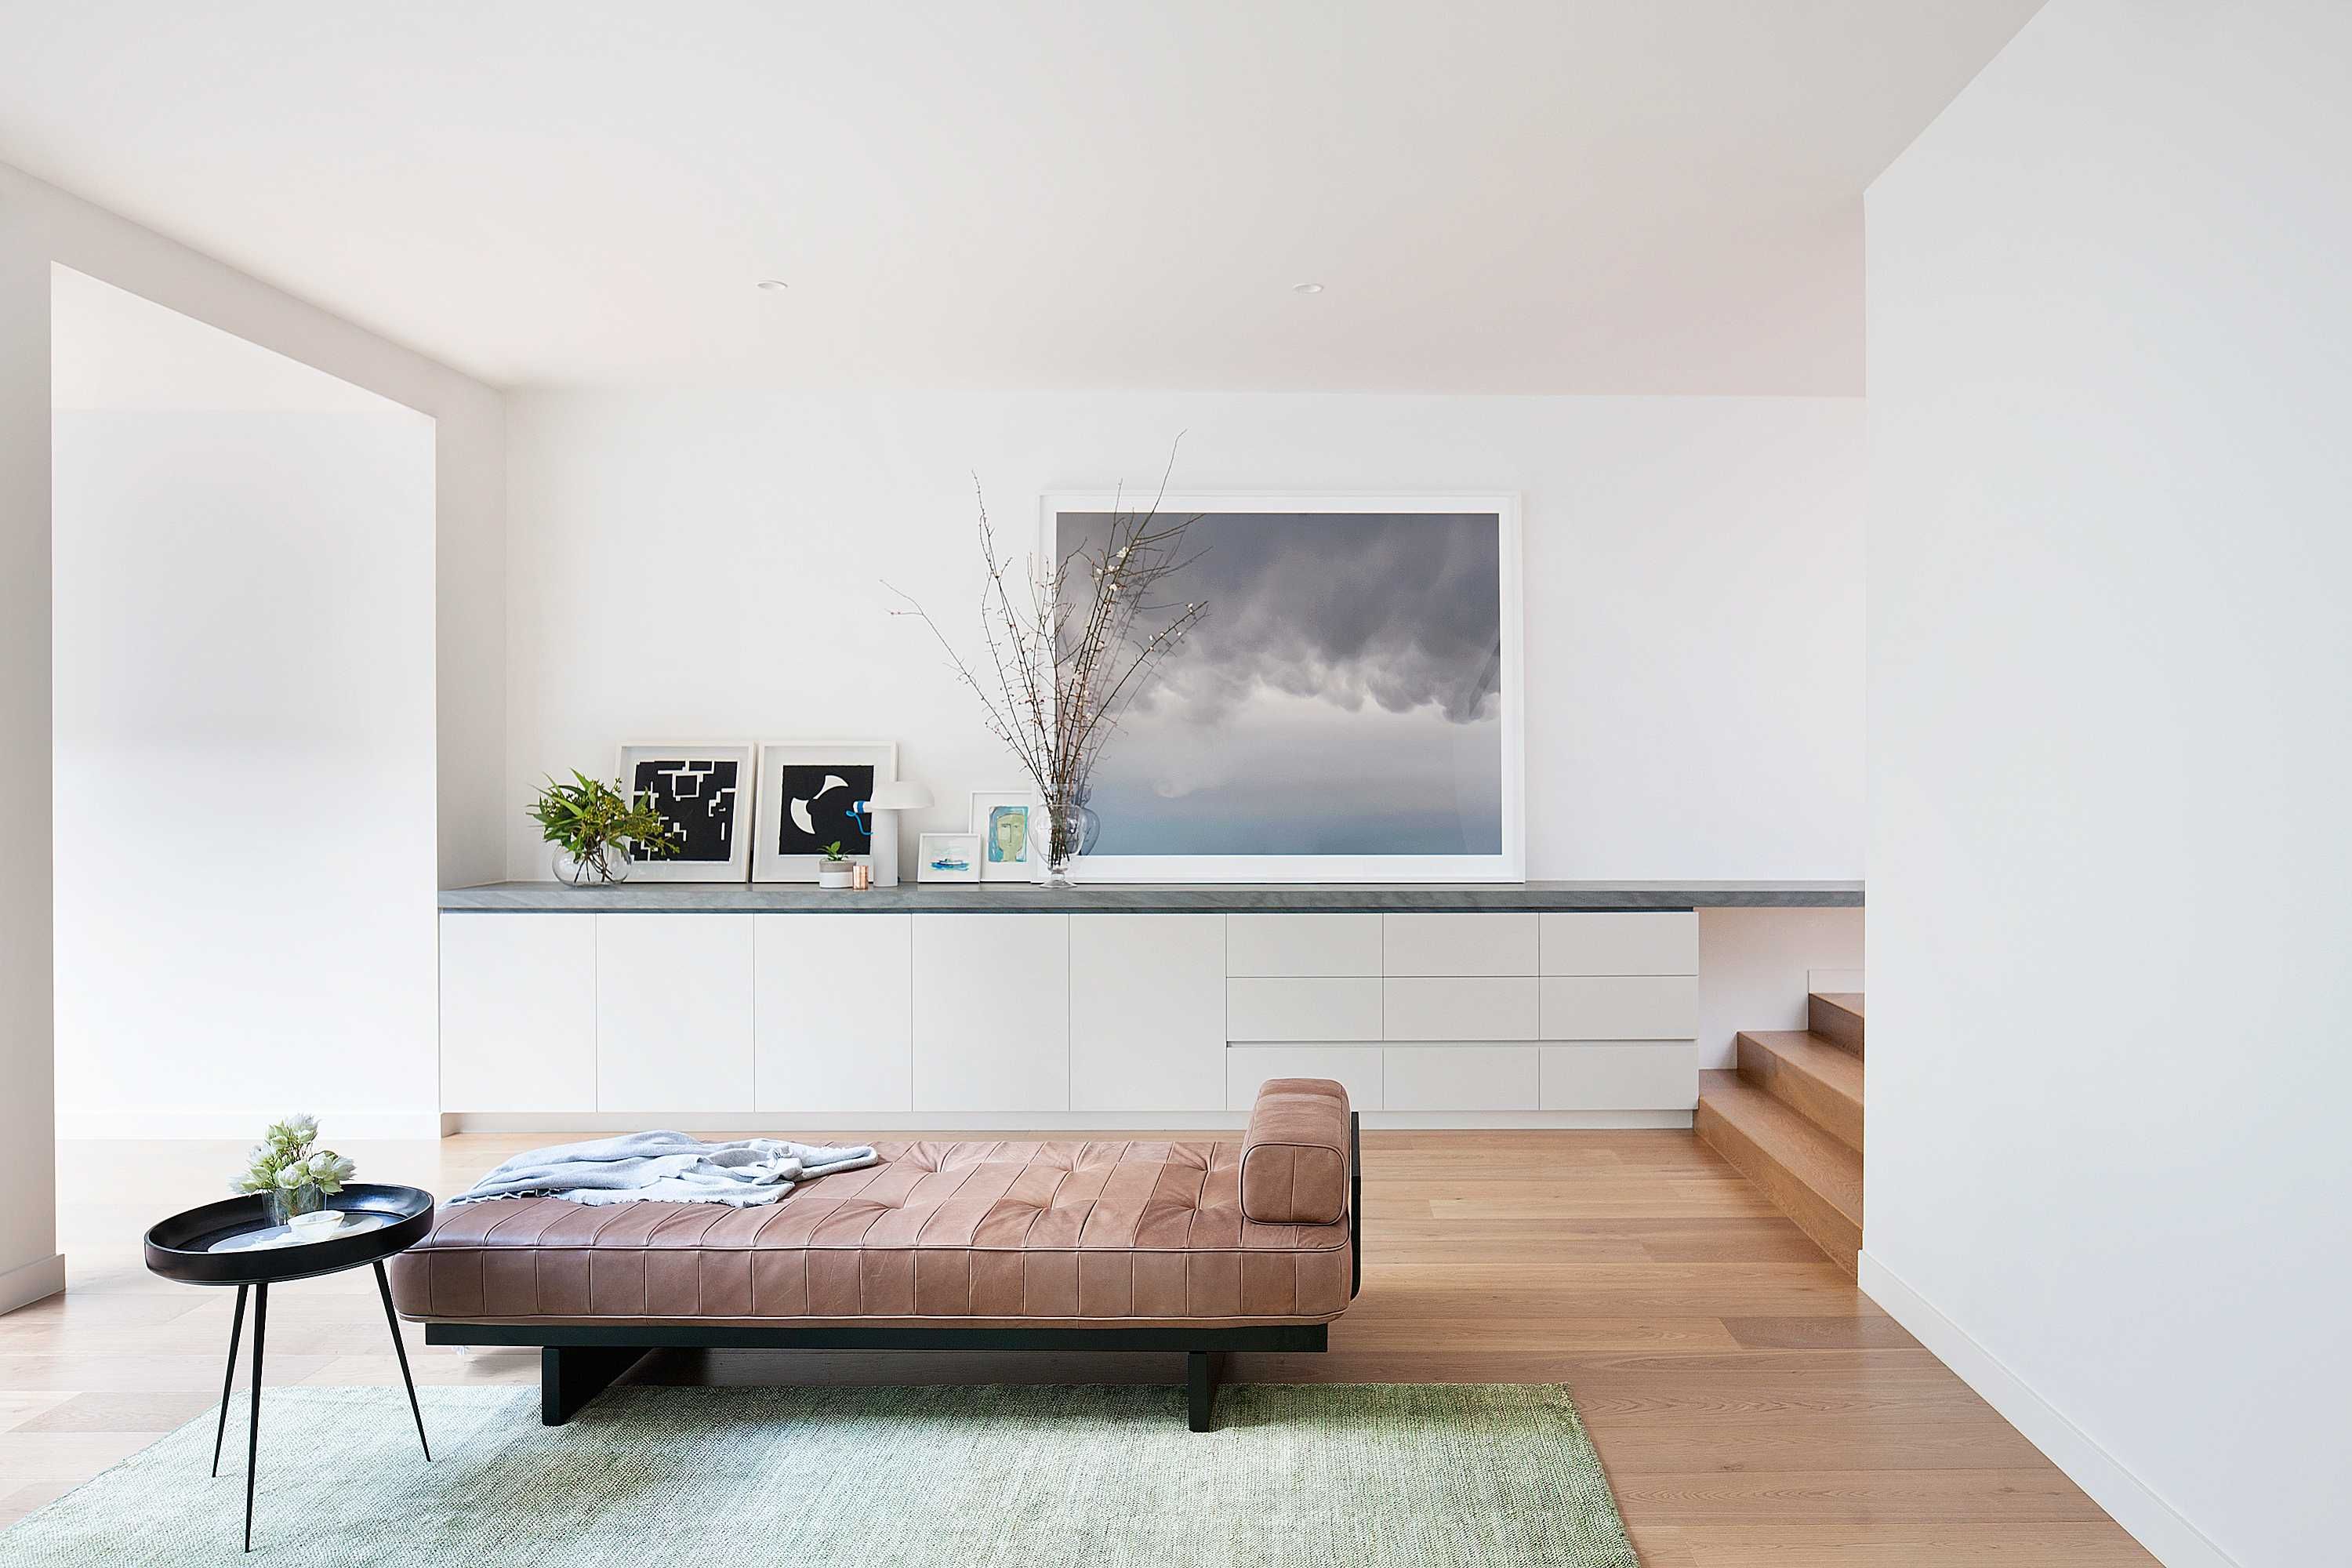 23 Stylish Minimalist Living Room Ideas Modern Living Room Decorating Tips And Inspiration